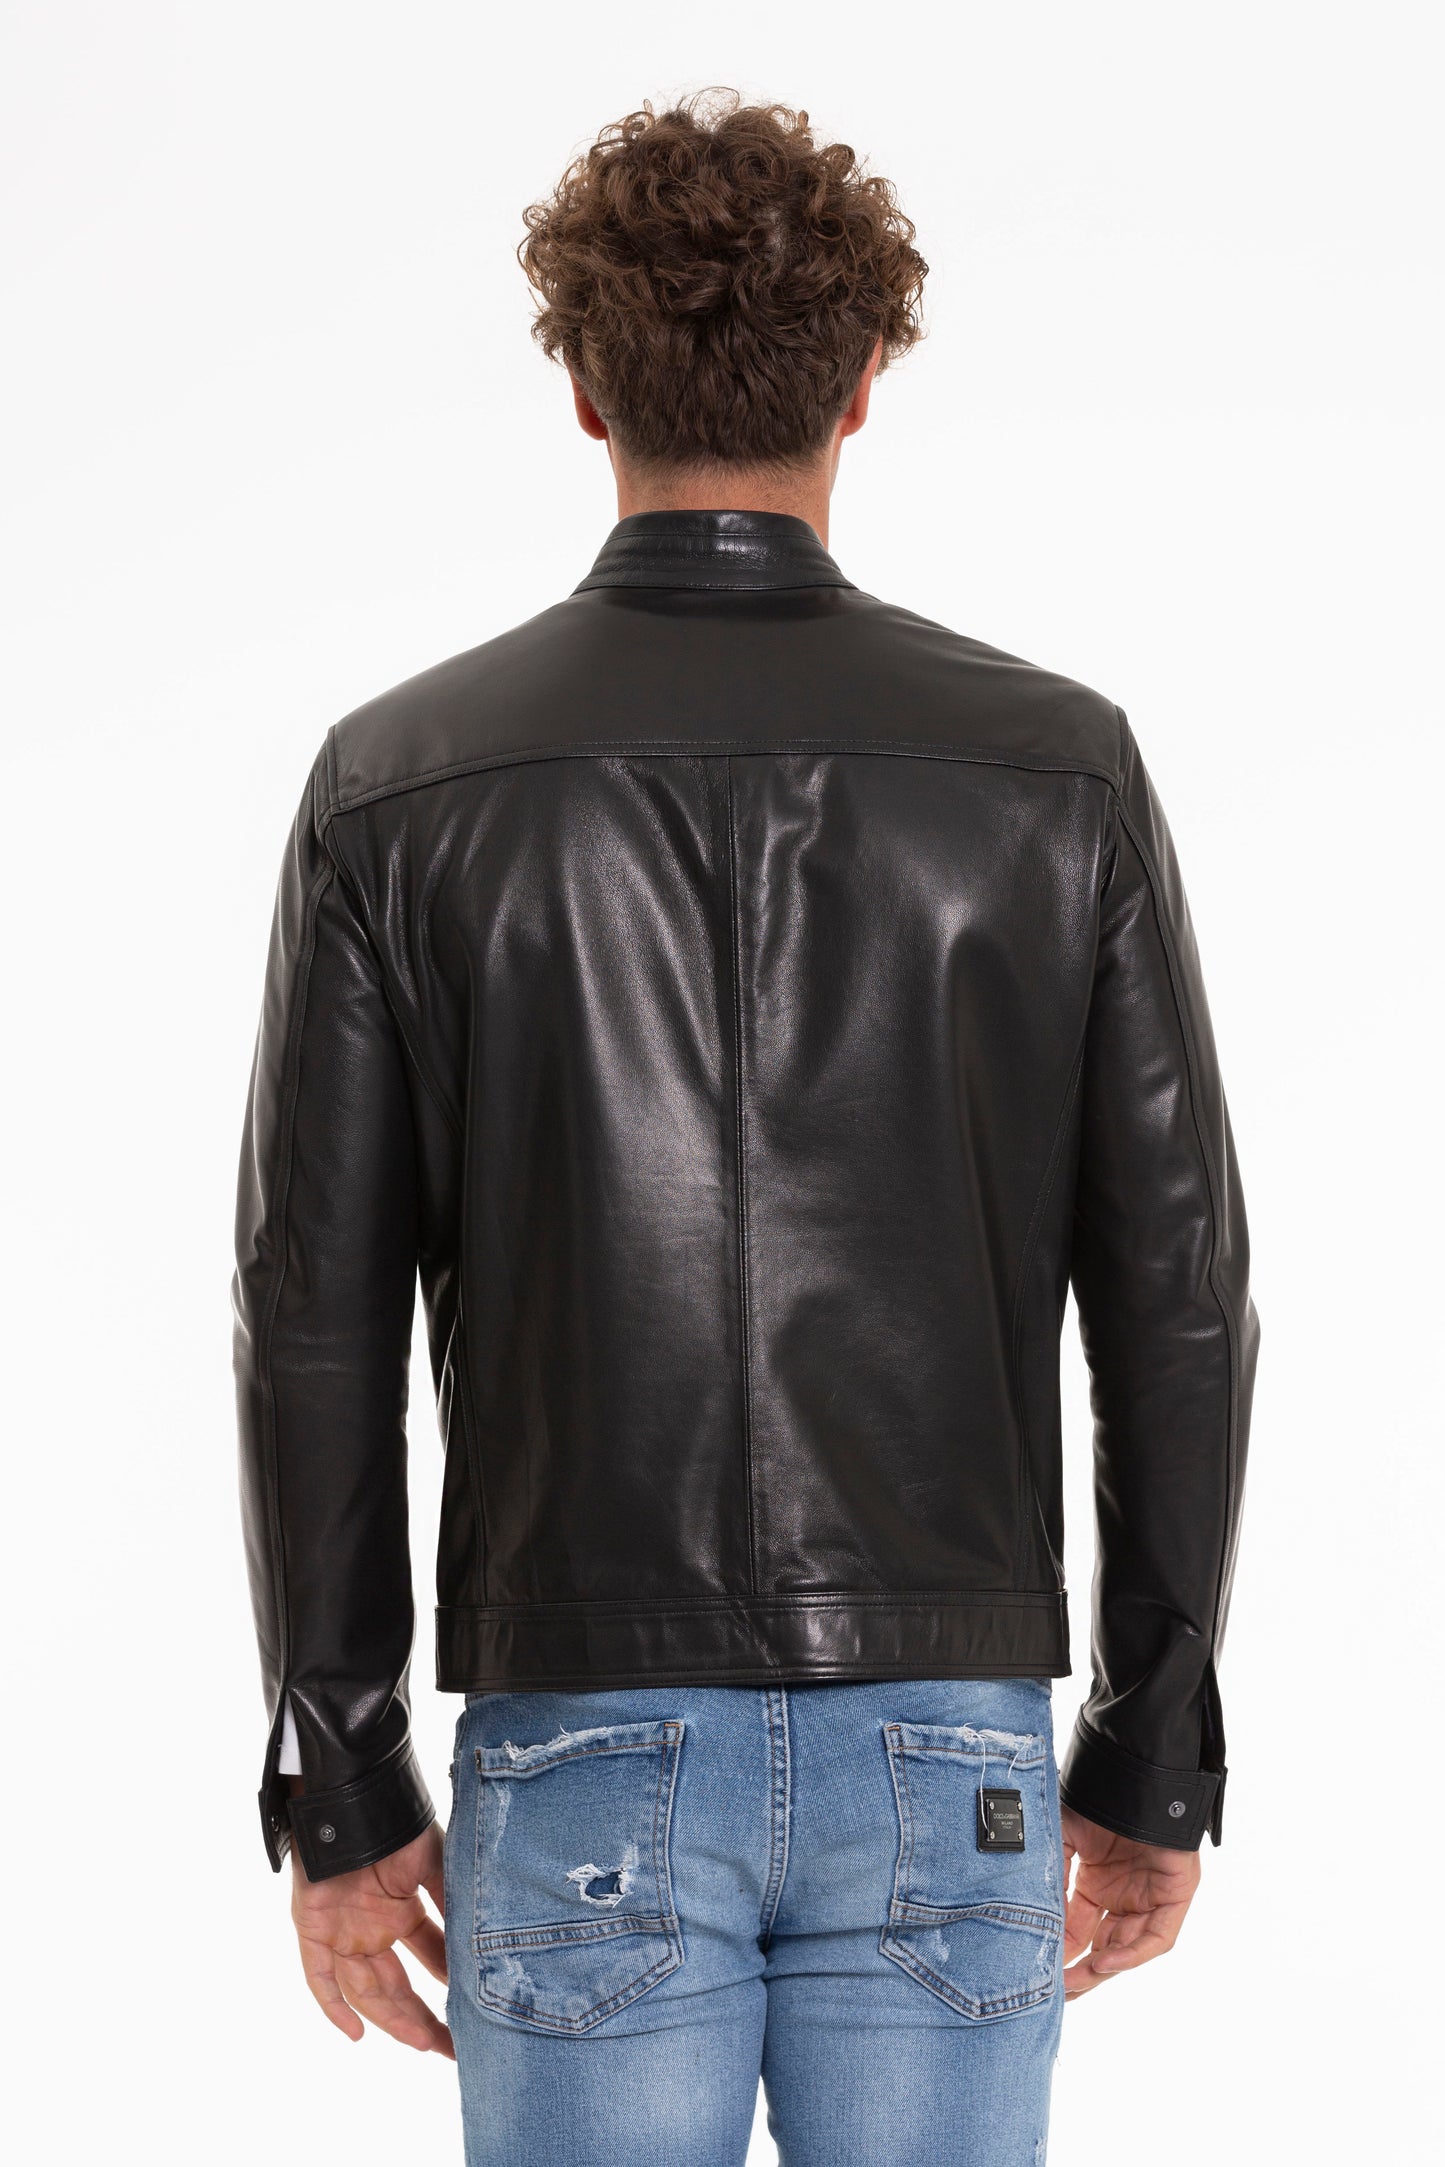 The Poleo Black Leather Men Jacket